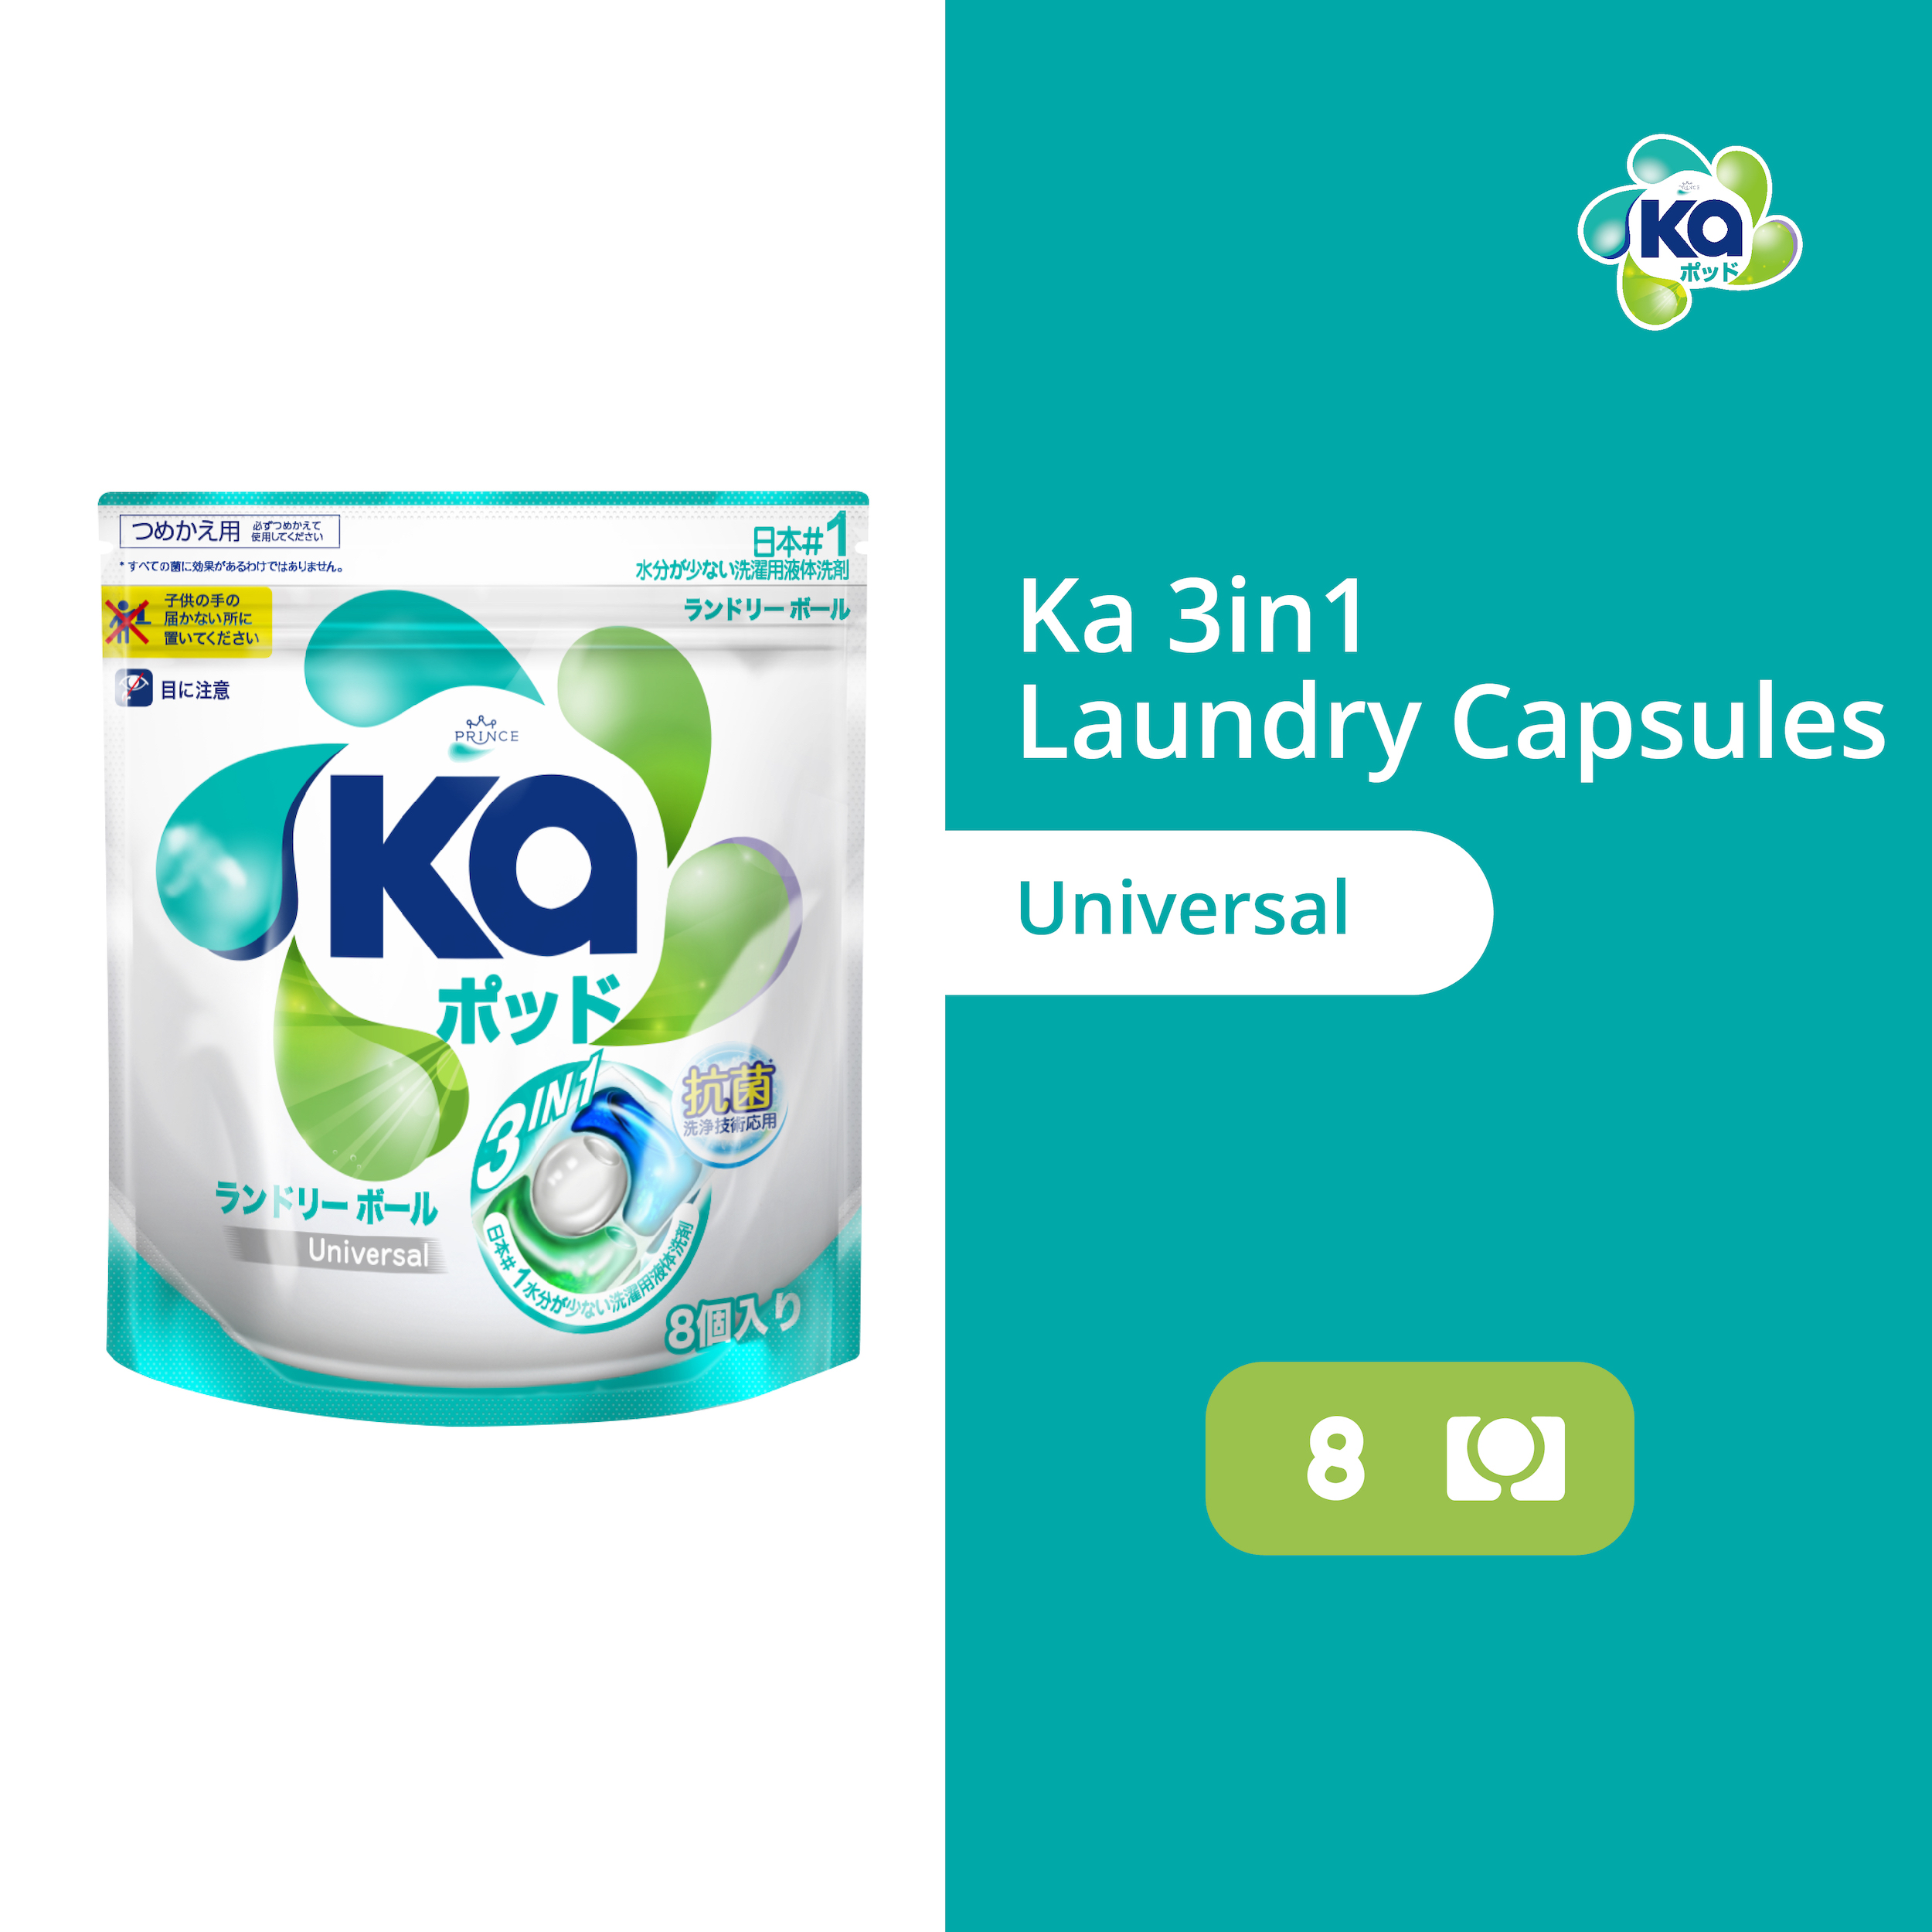 Ka 3in1 Laundry Capsules 8pcs – Universal